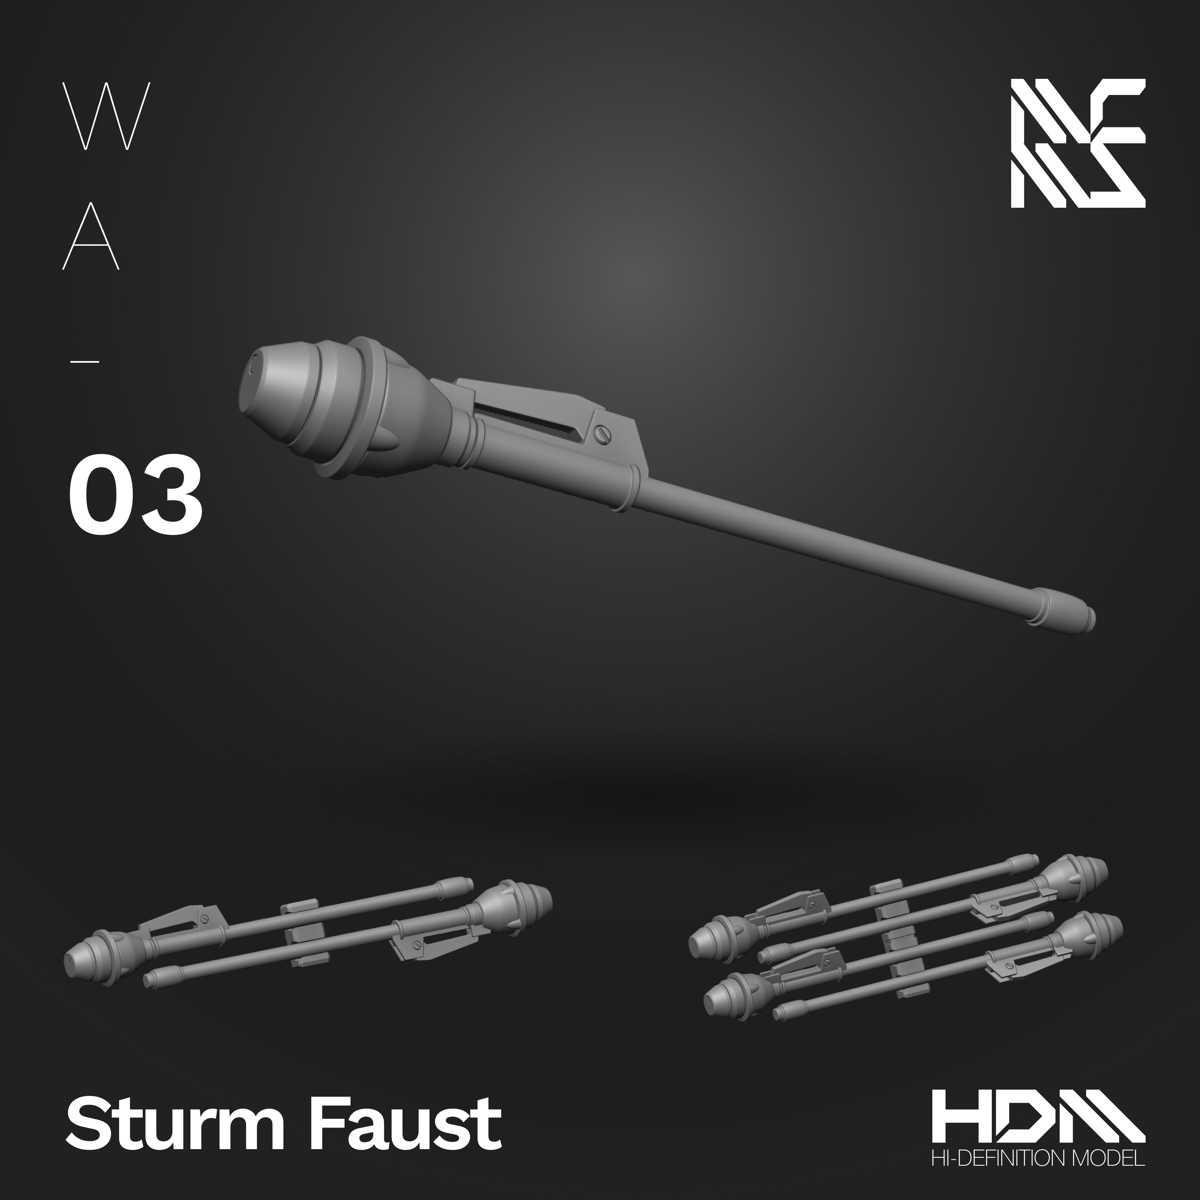 Image of HDM 1/100 Sturm Faust [WA-03]